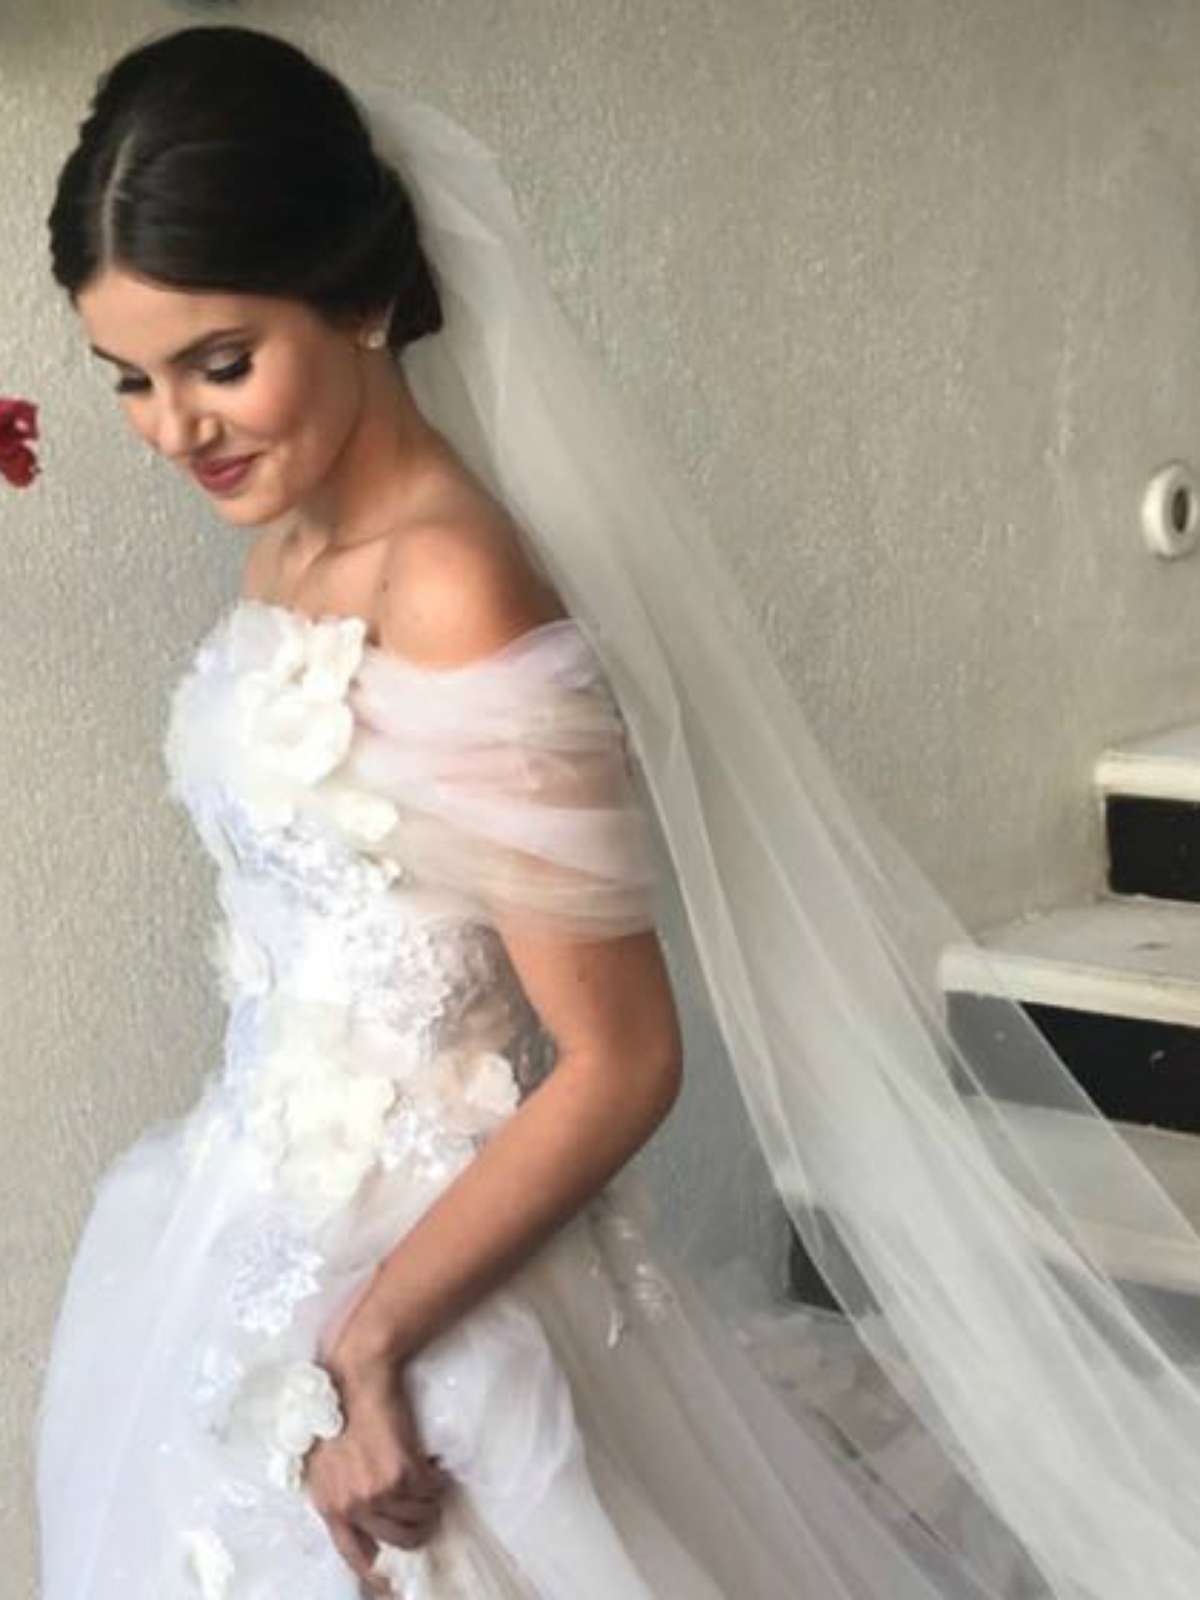 Vestidos de noiva princesa  Modelos, tecidos e dicas incríveis